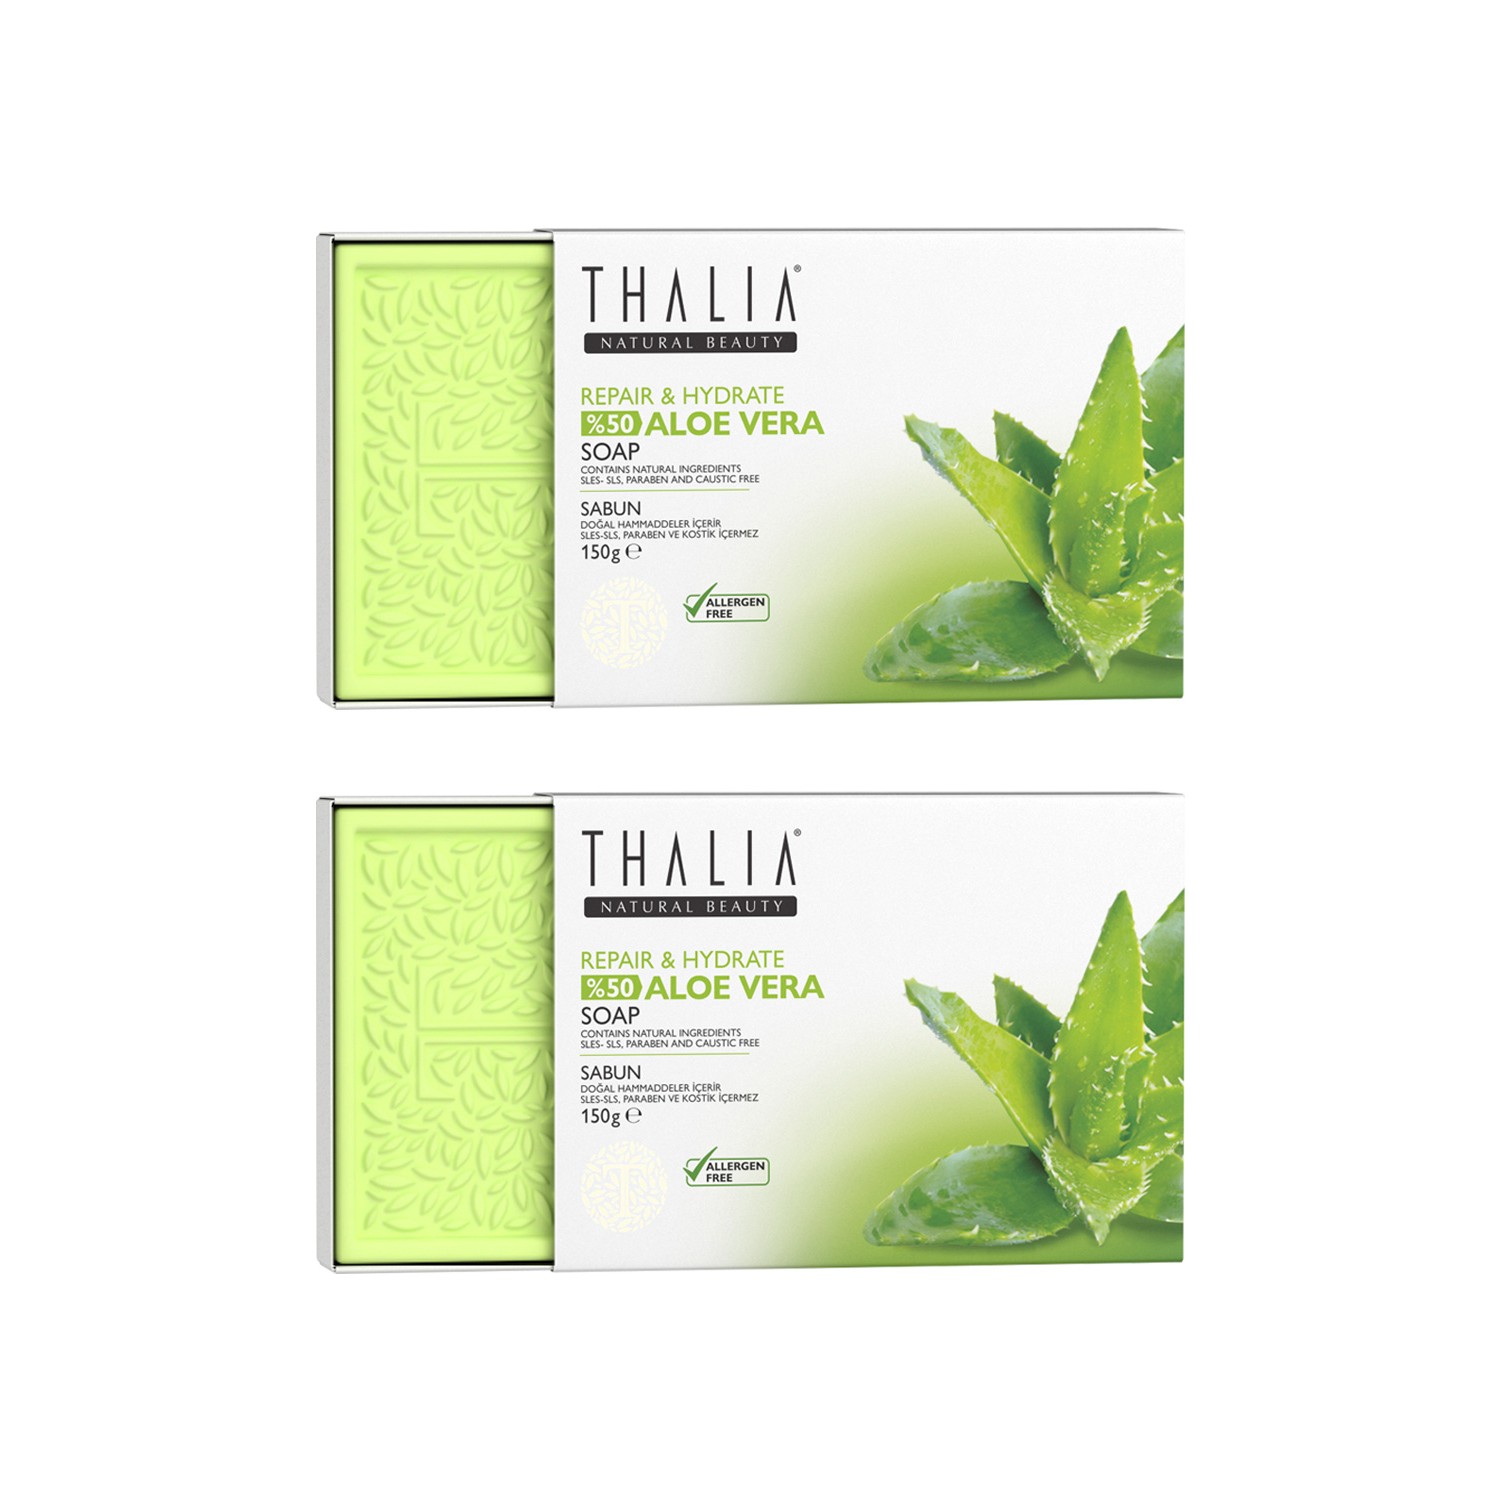 Натуральное твердое мыло Thalia Aloe Vera, 2 x 75 гр thalia natural beauty repair